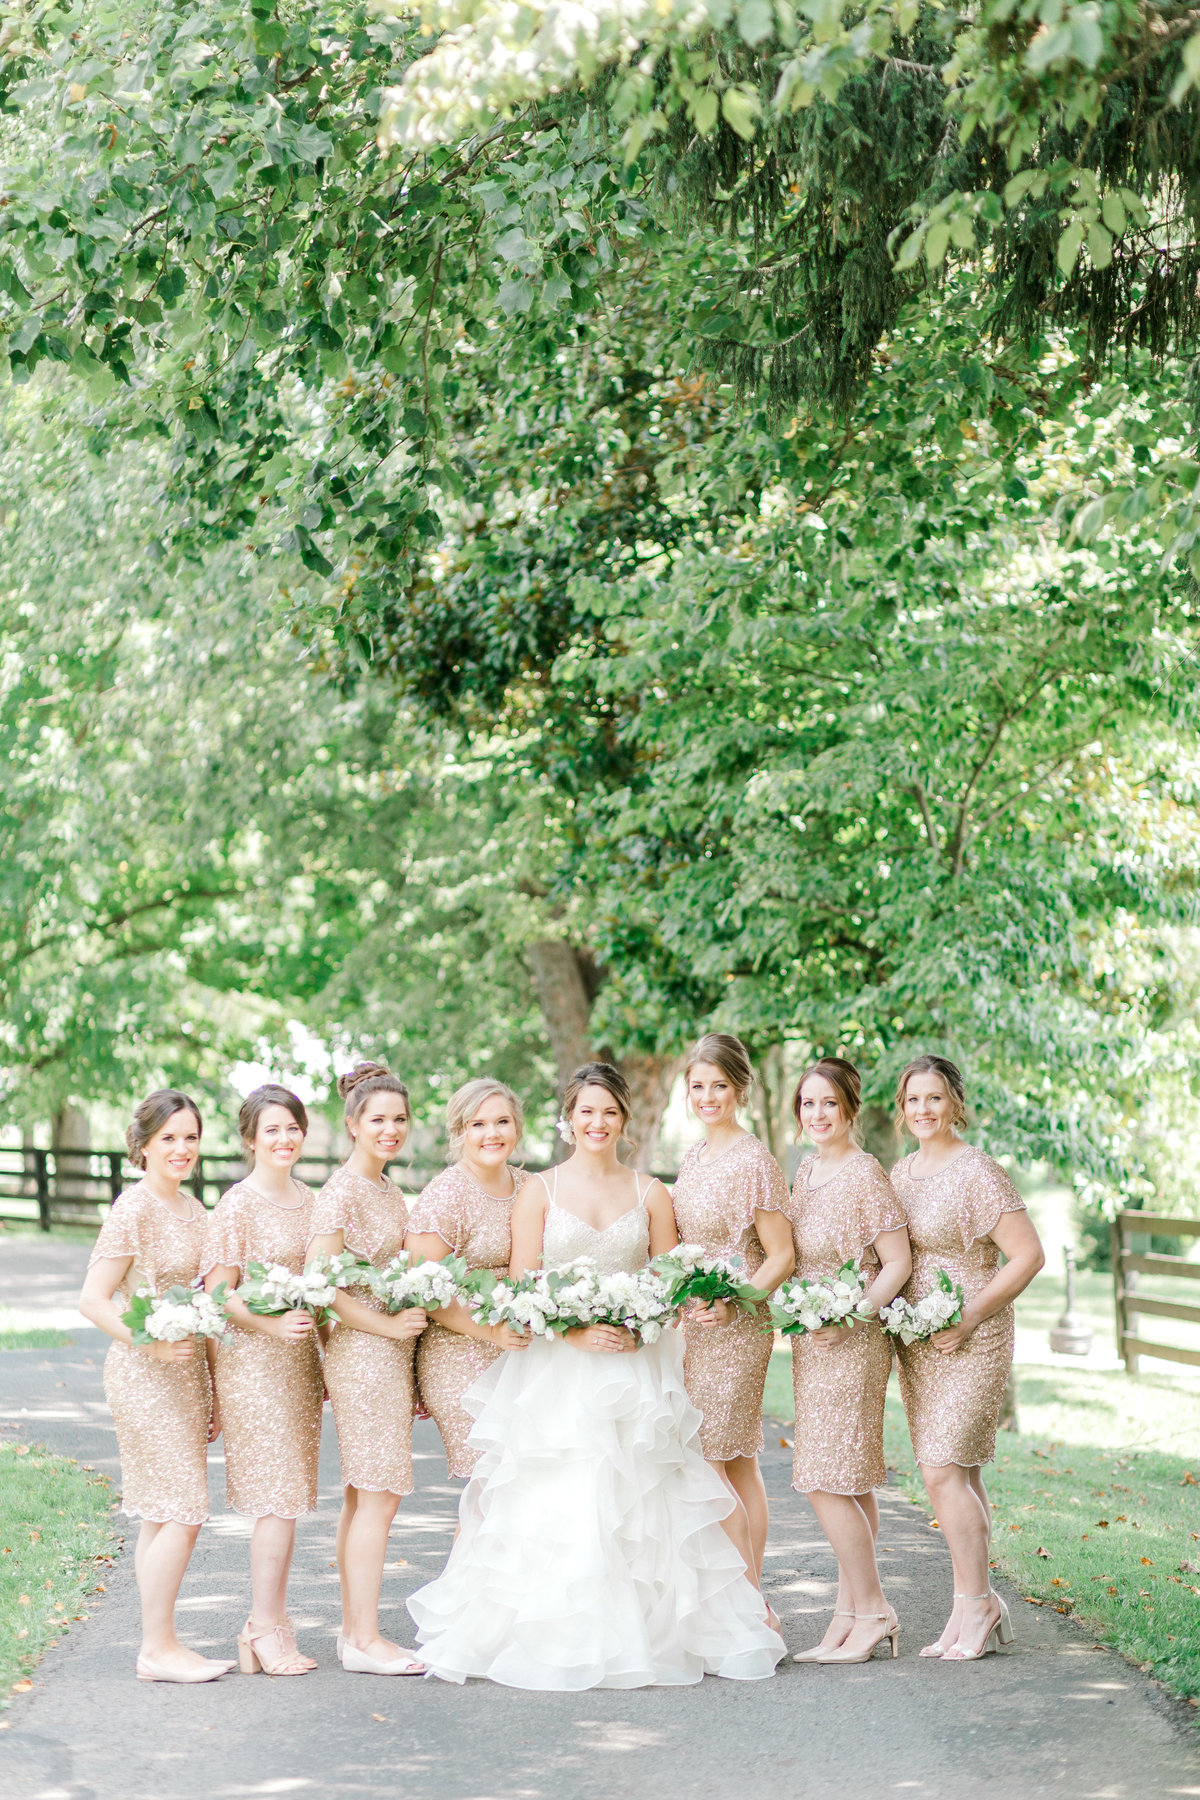 Warrenwood Manor - Kentucky Wedding Venue - Photo by Leanne Hunley 00048